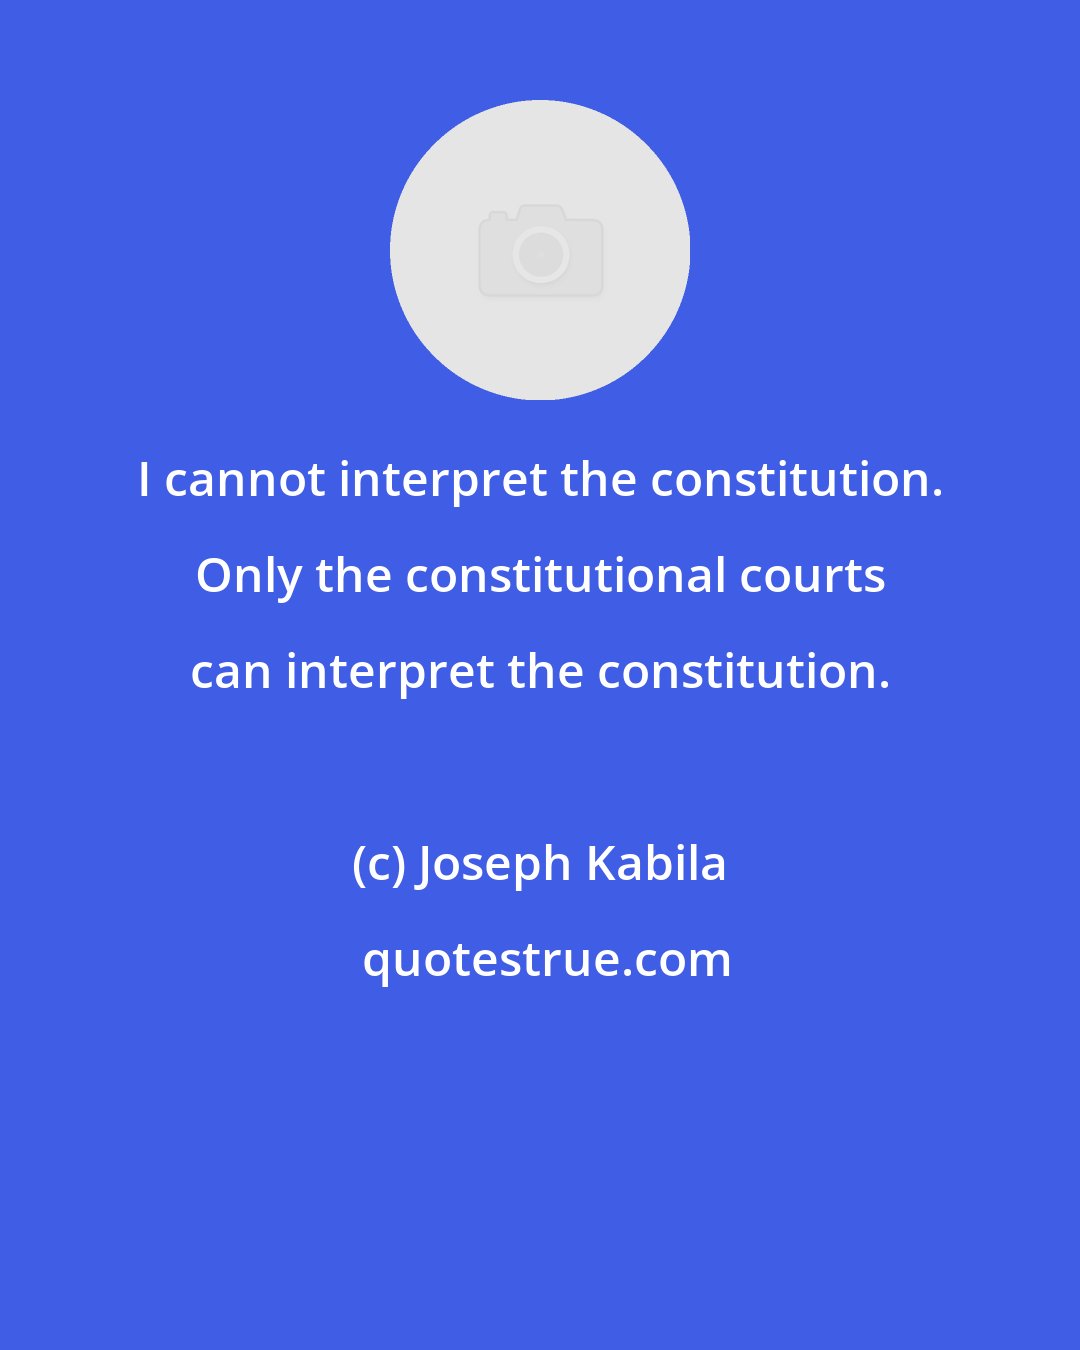 Joseph Kabila: I cannot interpret the constitution. Only the constitutional courts can interpret the constitution.